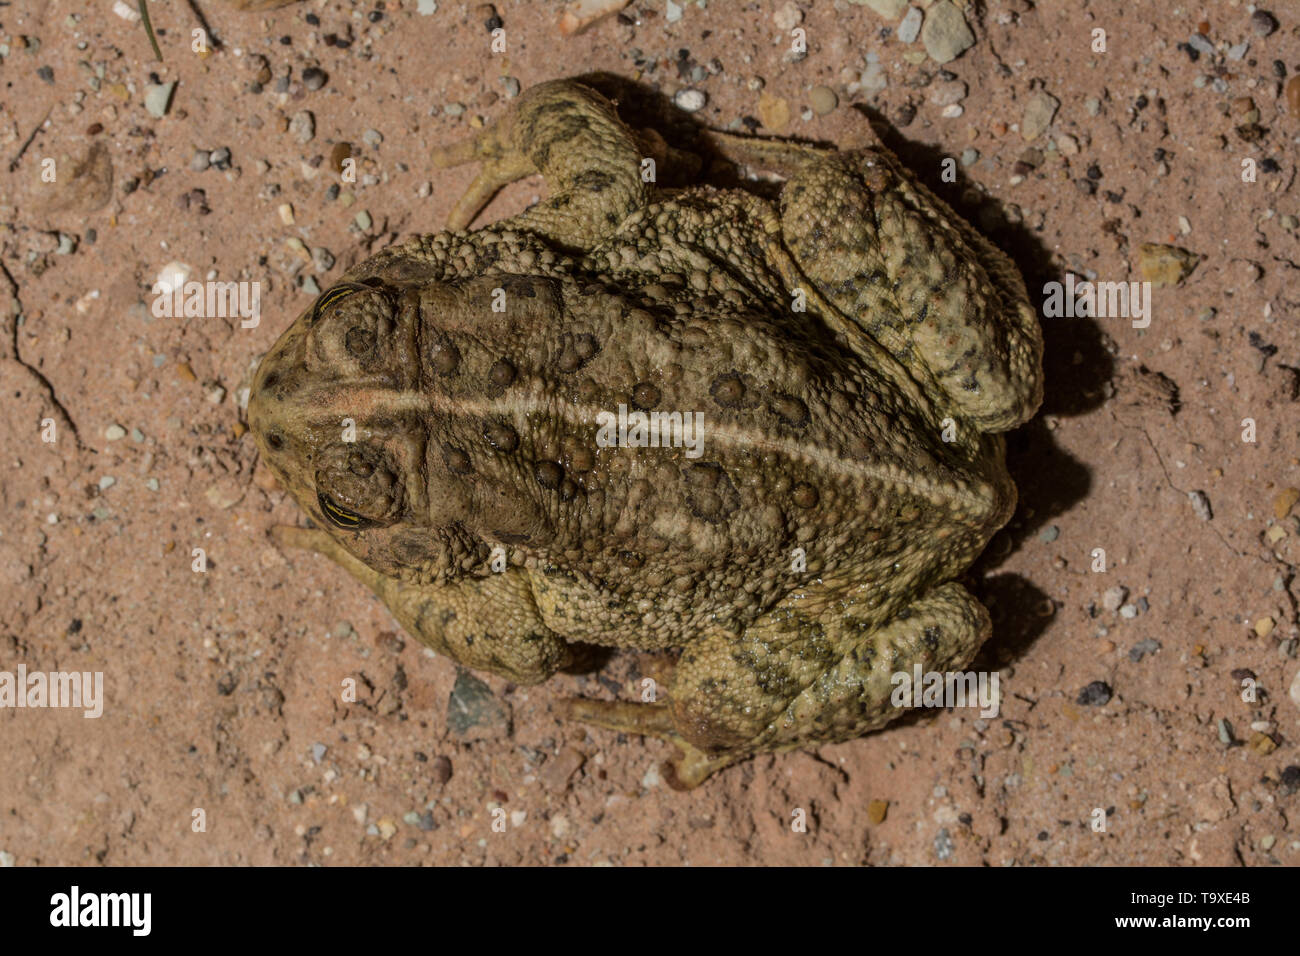 Rocky Mountain (Toad Anaxyrus woodhousii. w) à partir de San Juan County, Utah, USA. Banque D'Images